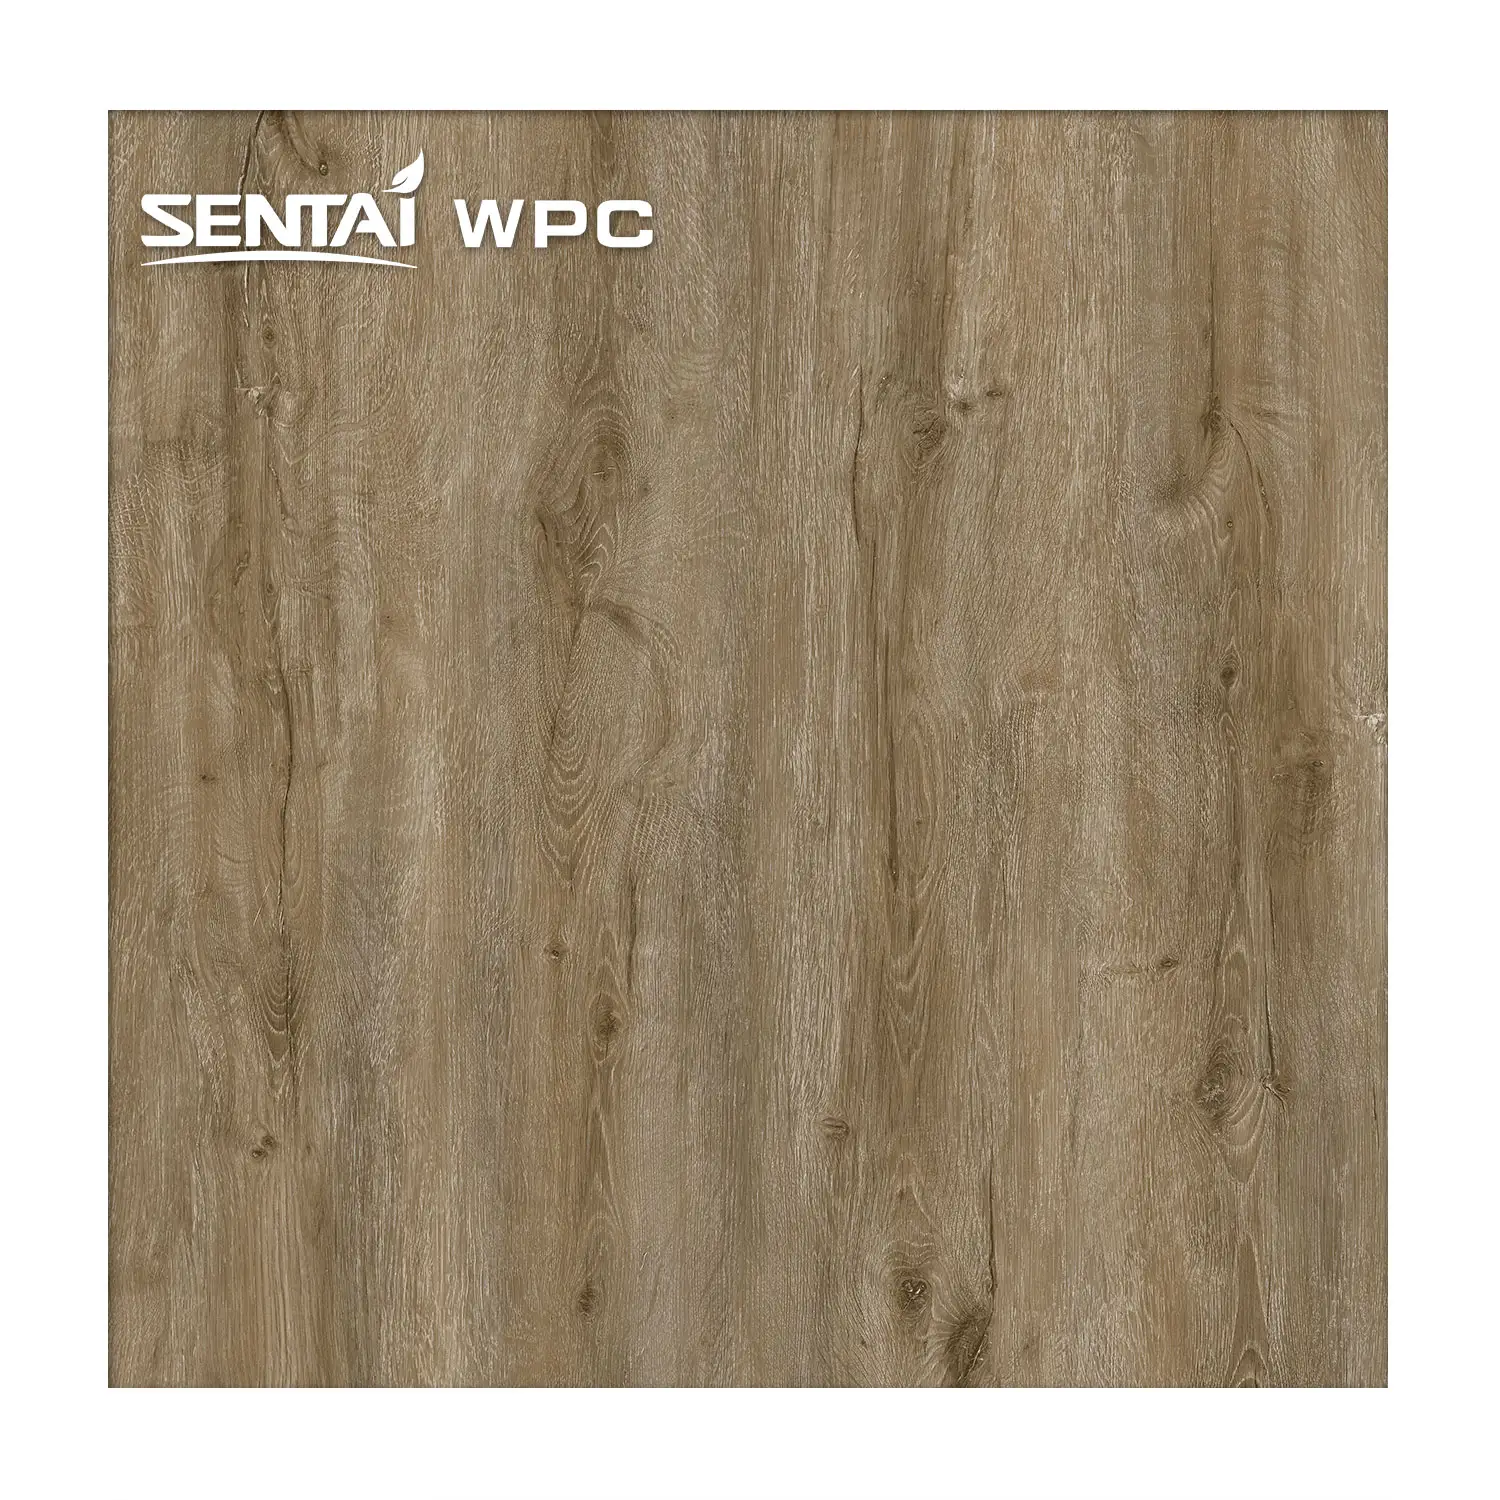 sentai high quality laminated plastic click flooring interlock click lvt pvc vinyl flooring spc flooring